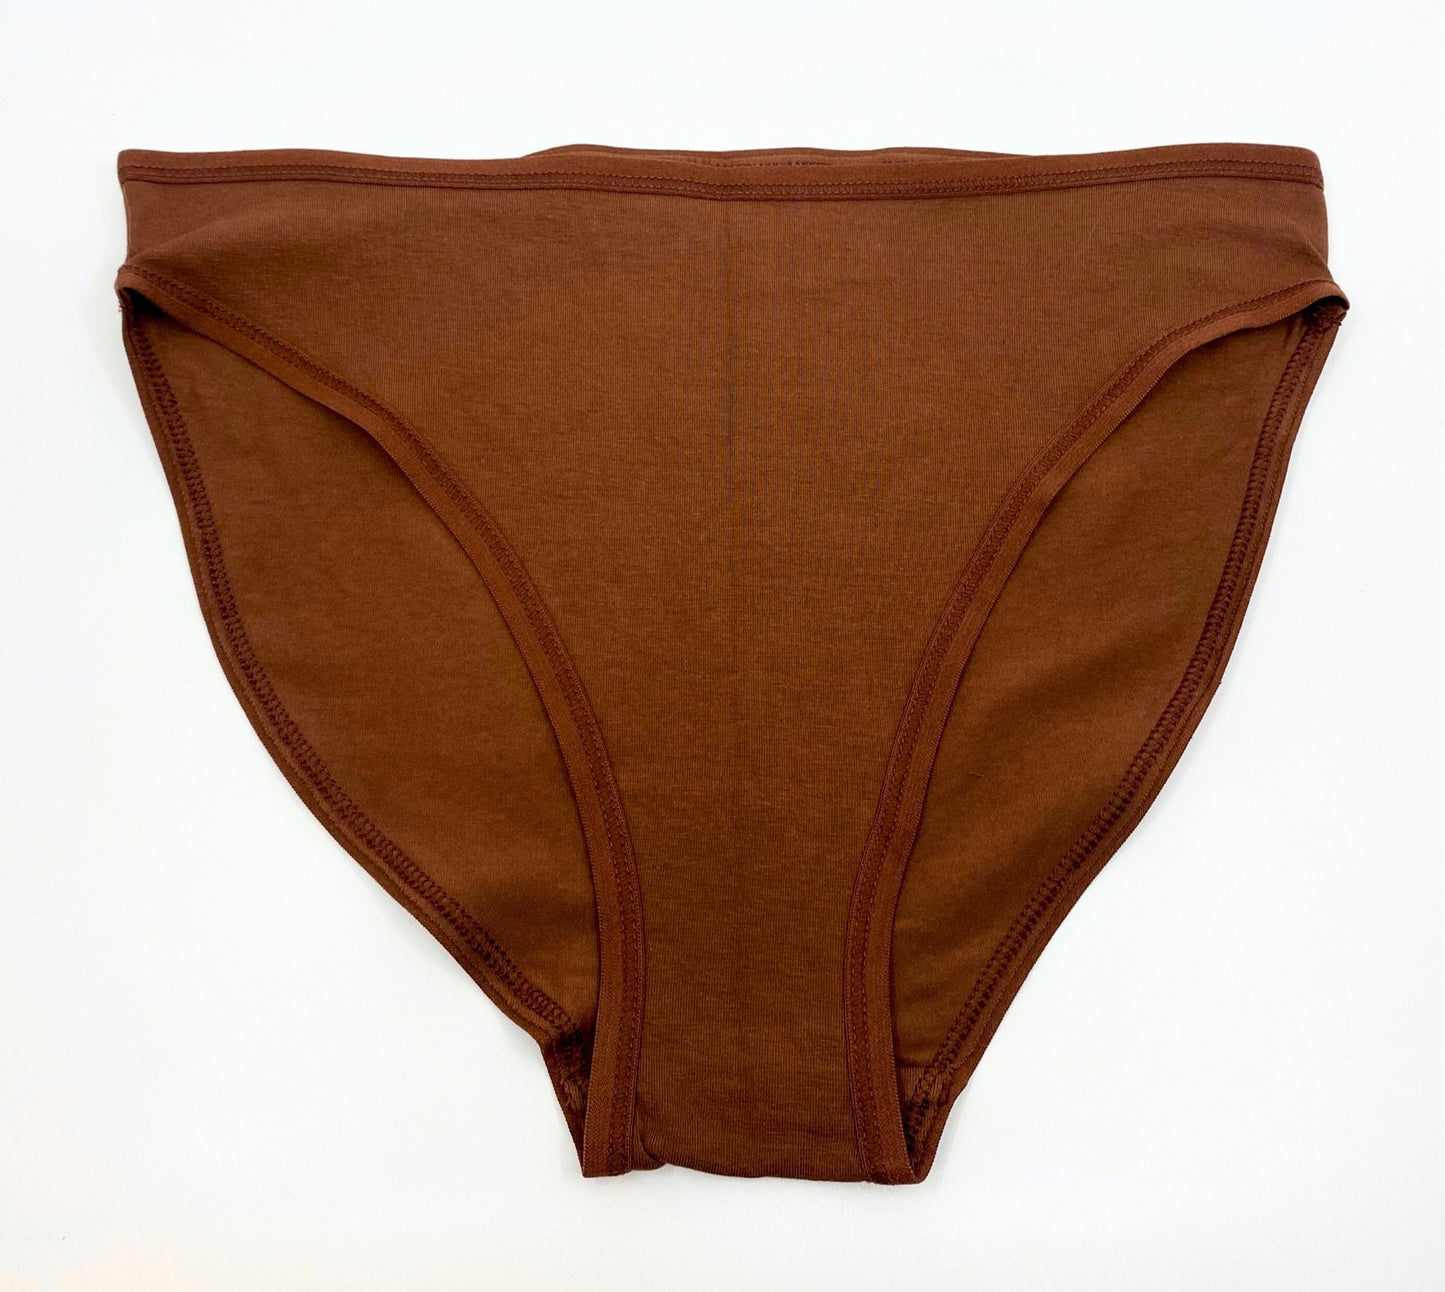 Women's organic cotton mid-rise bikini bottoms in chestnut